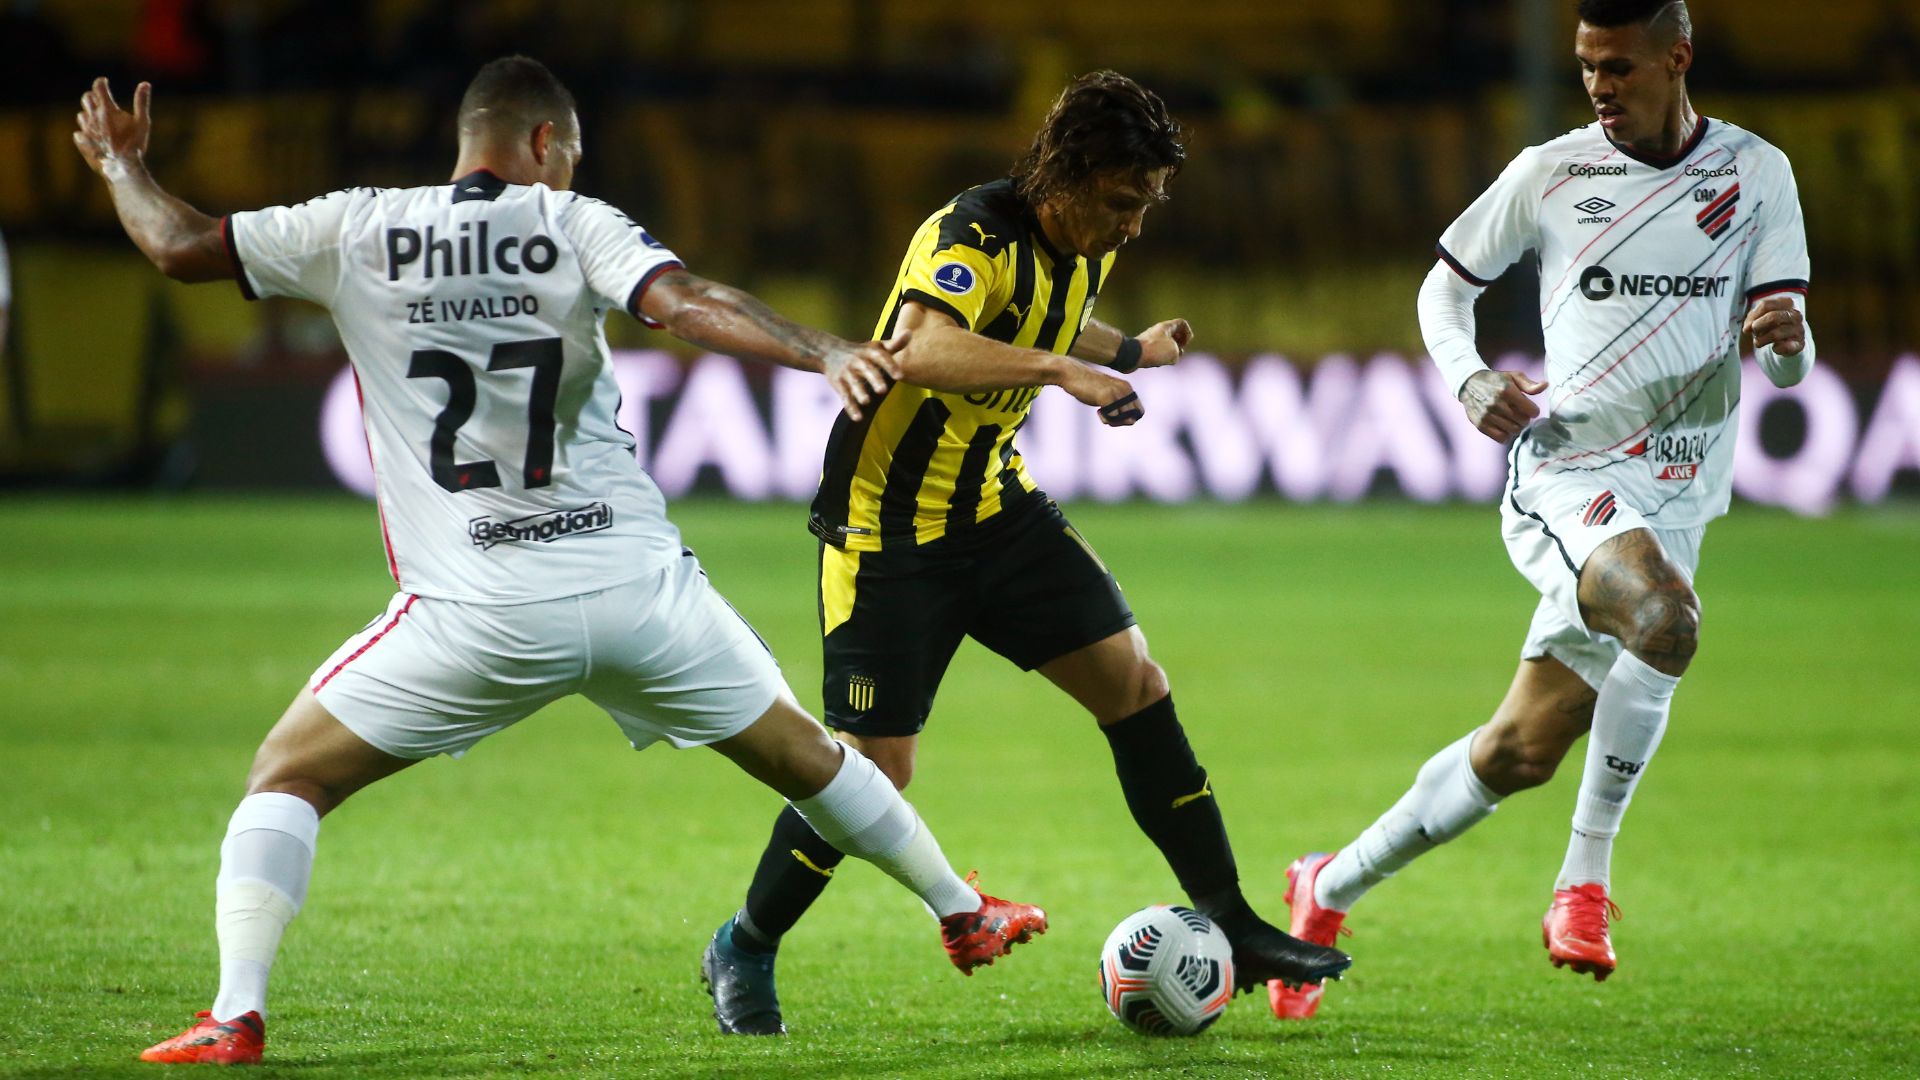 Zé Ivaldo in action against Peñarol (Credit: Getty Images)